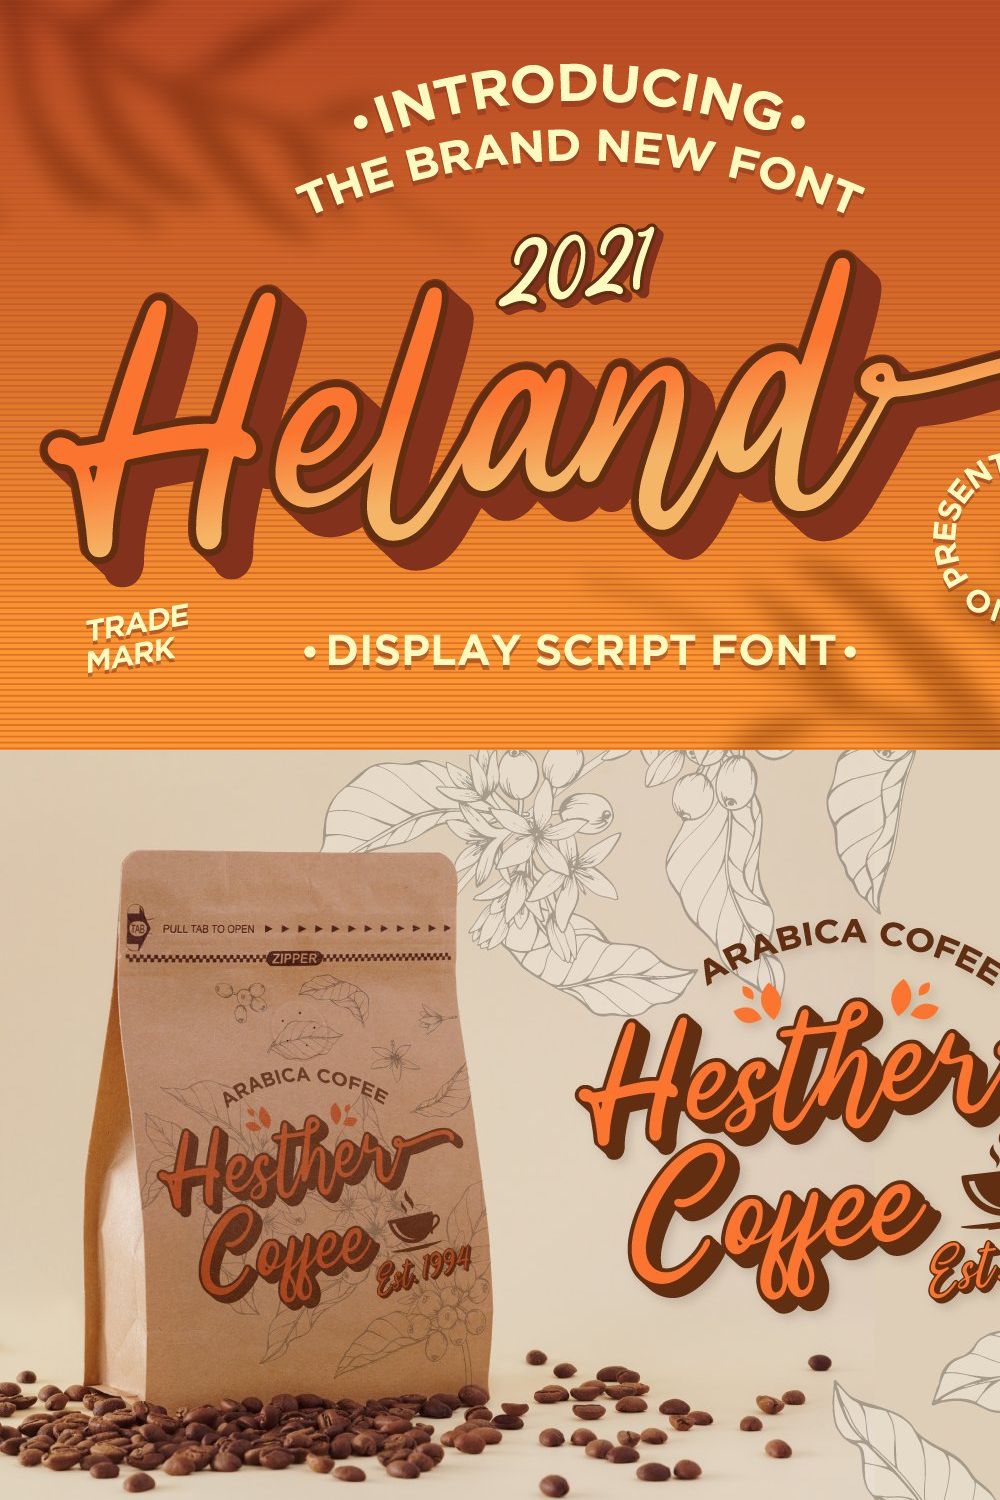 Heland - Display Script Font pinterest preview image.